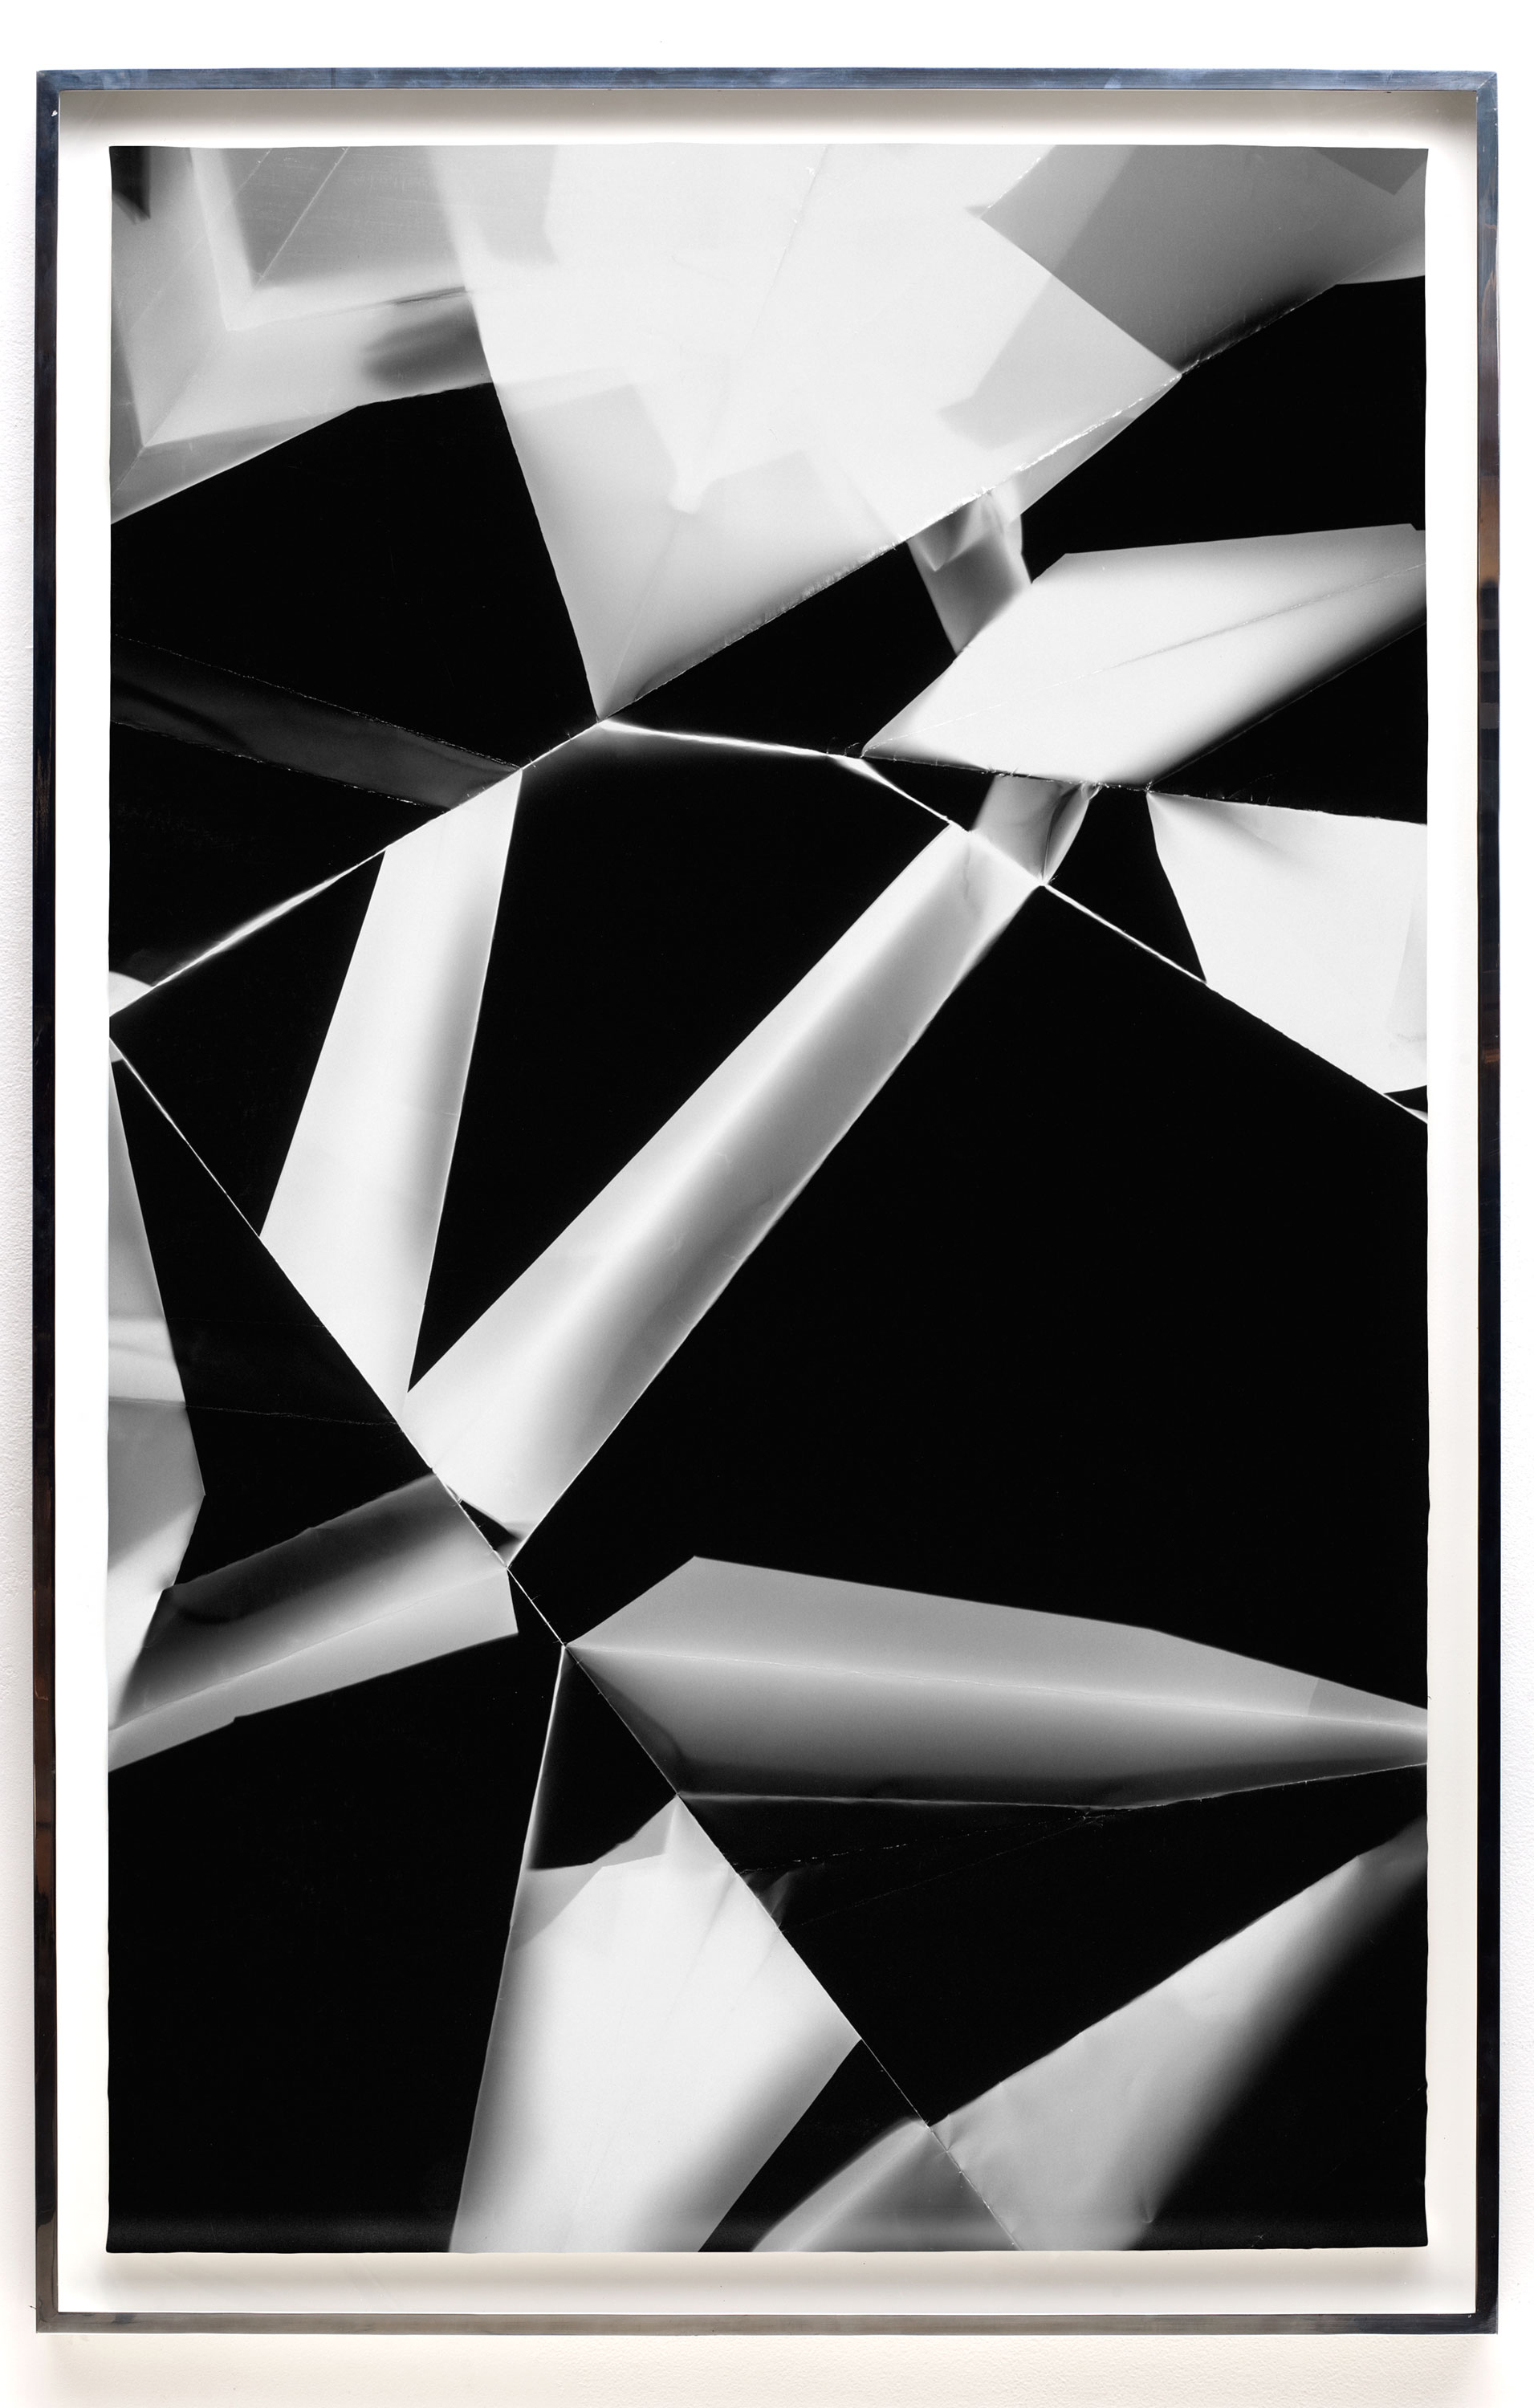   Fold (60º/120º/180º/240º/300º/360º directional light sources), June 5, 2008, Annandale-On-Hudson, New York, Foma Multigrade Fiber    2009   Black and white fiber based photographic paper  72 x 46 3/4 inches  Exhibition:  Legibility on Color Backgro